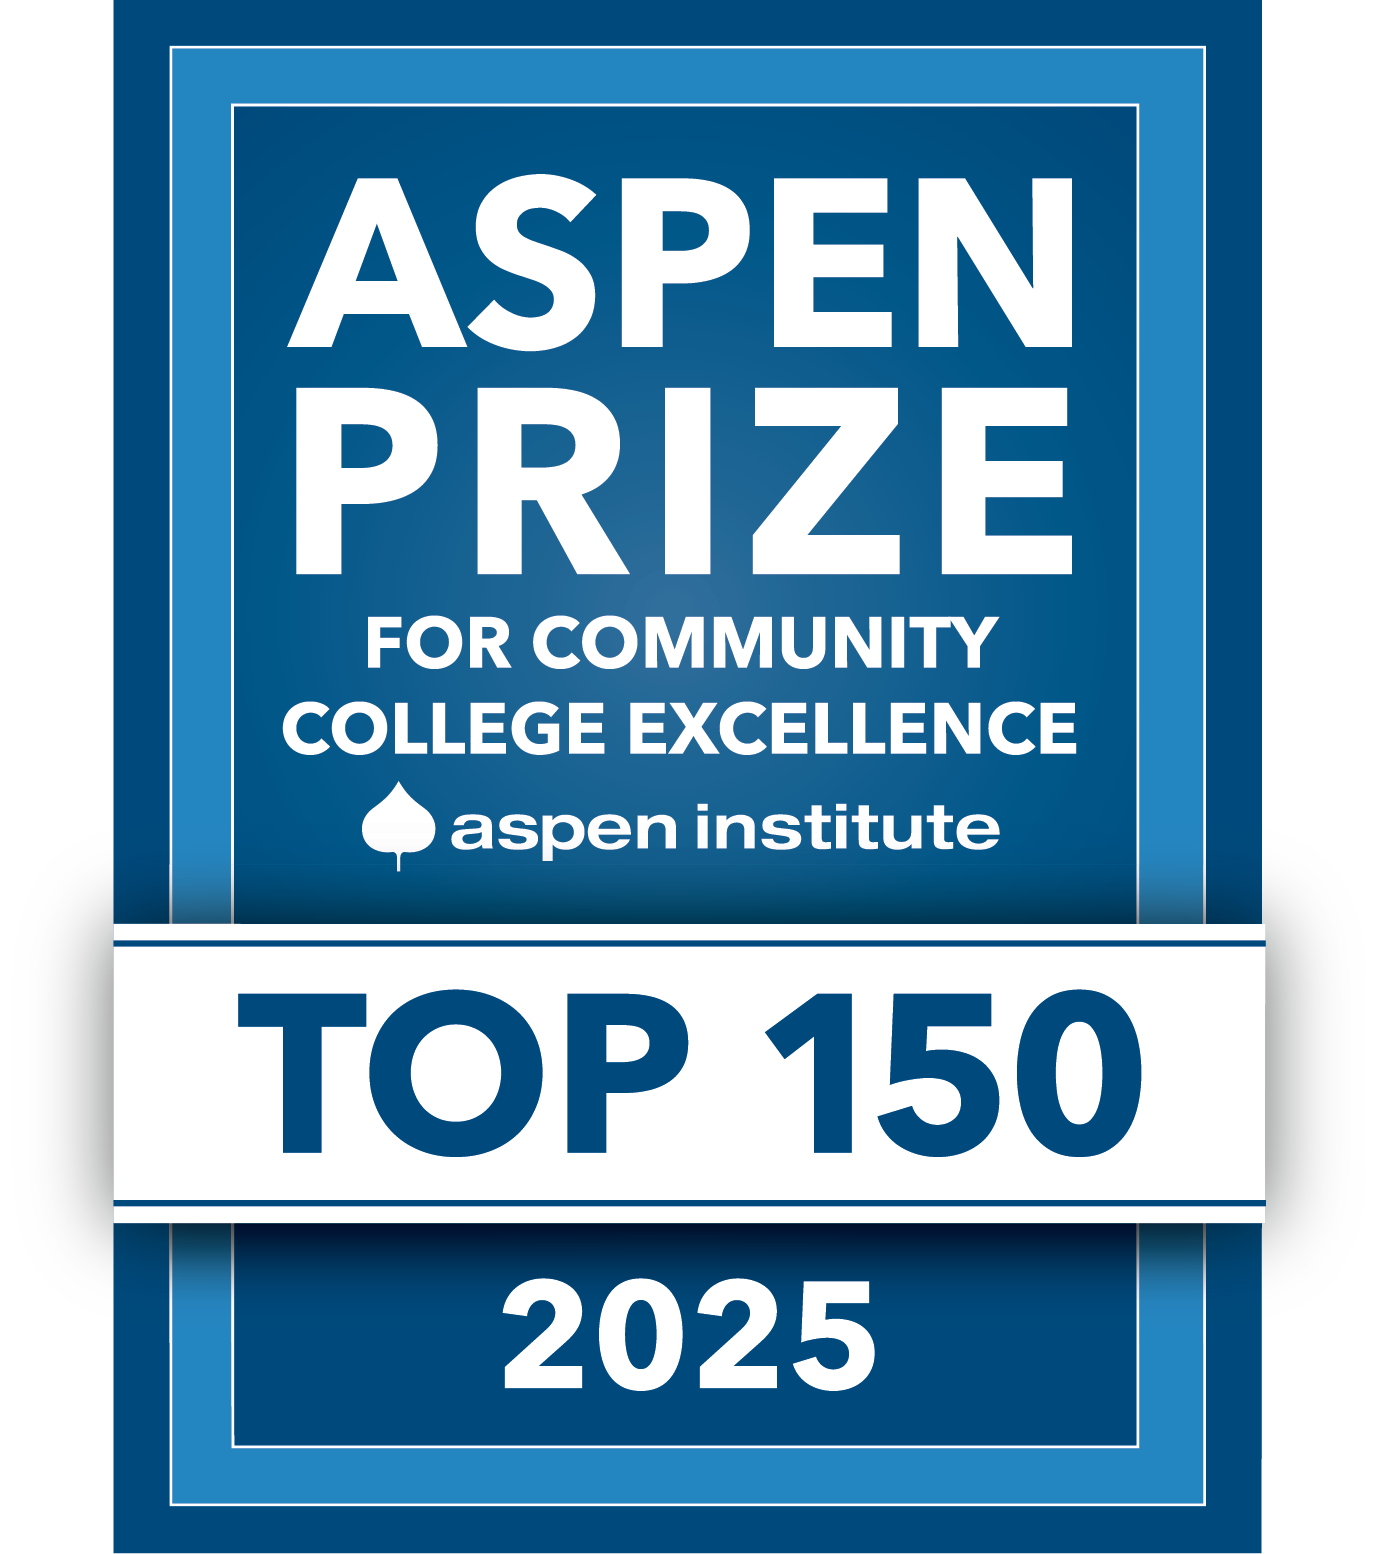 Aspen Prize Top 150 Award